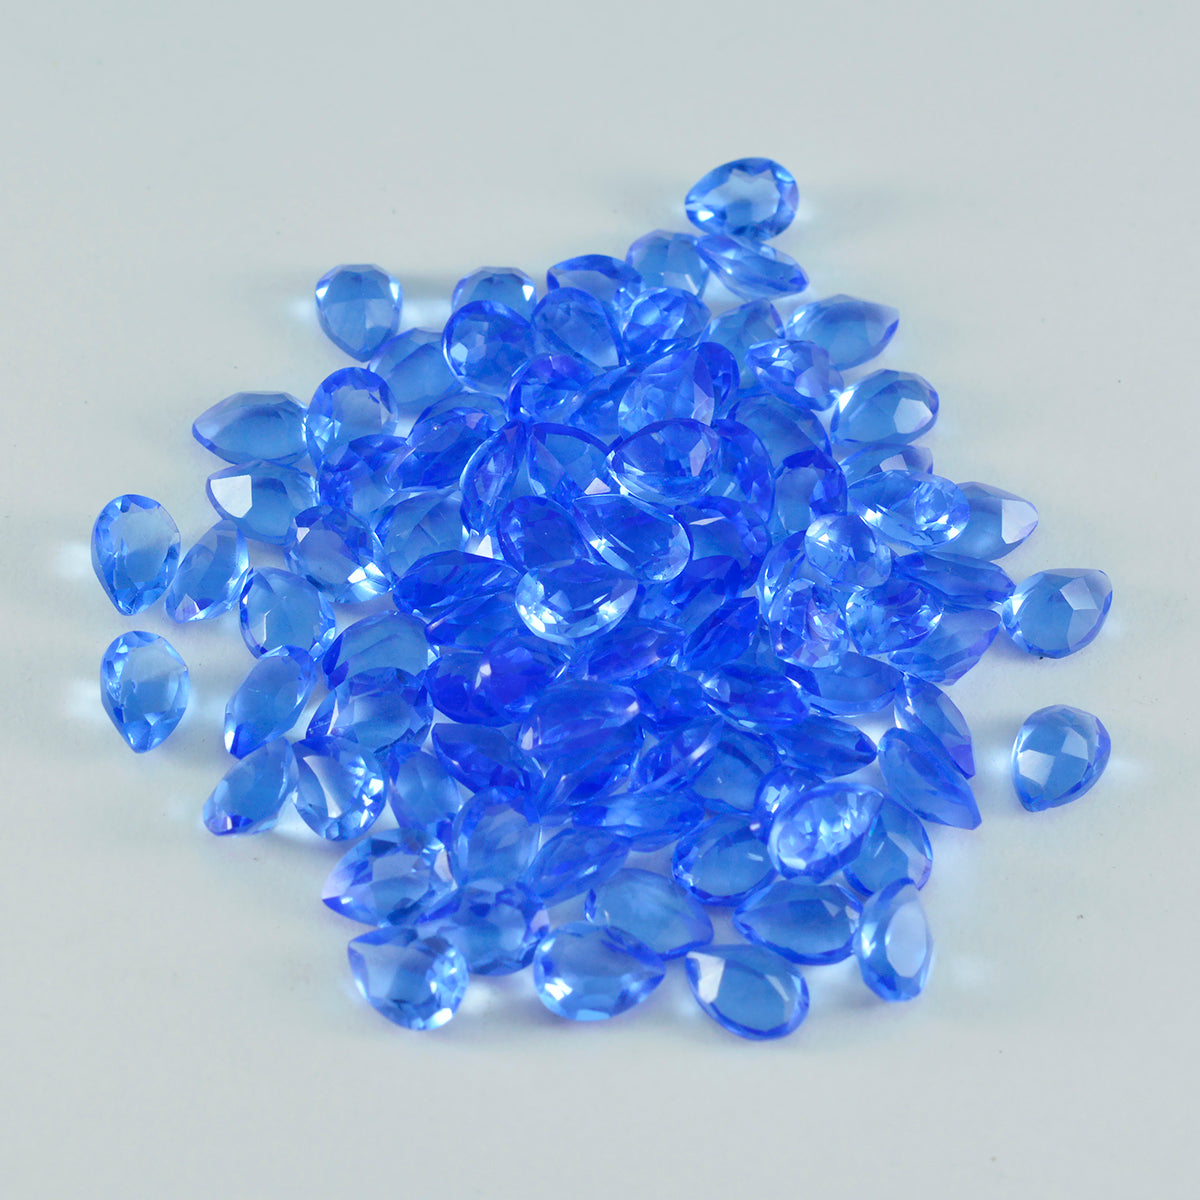 Riyogems 1PC Blue Sapphire CZ Faceted 3x5 mm Pear Shape handsome Quality Loose Gemstone